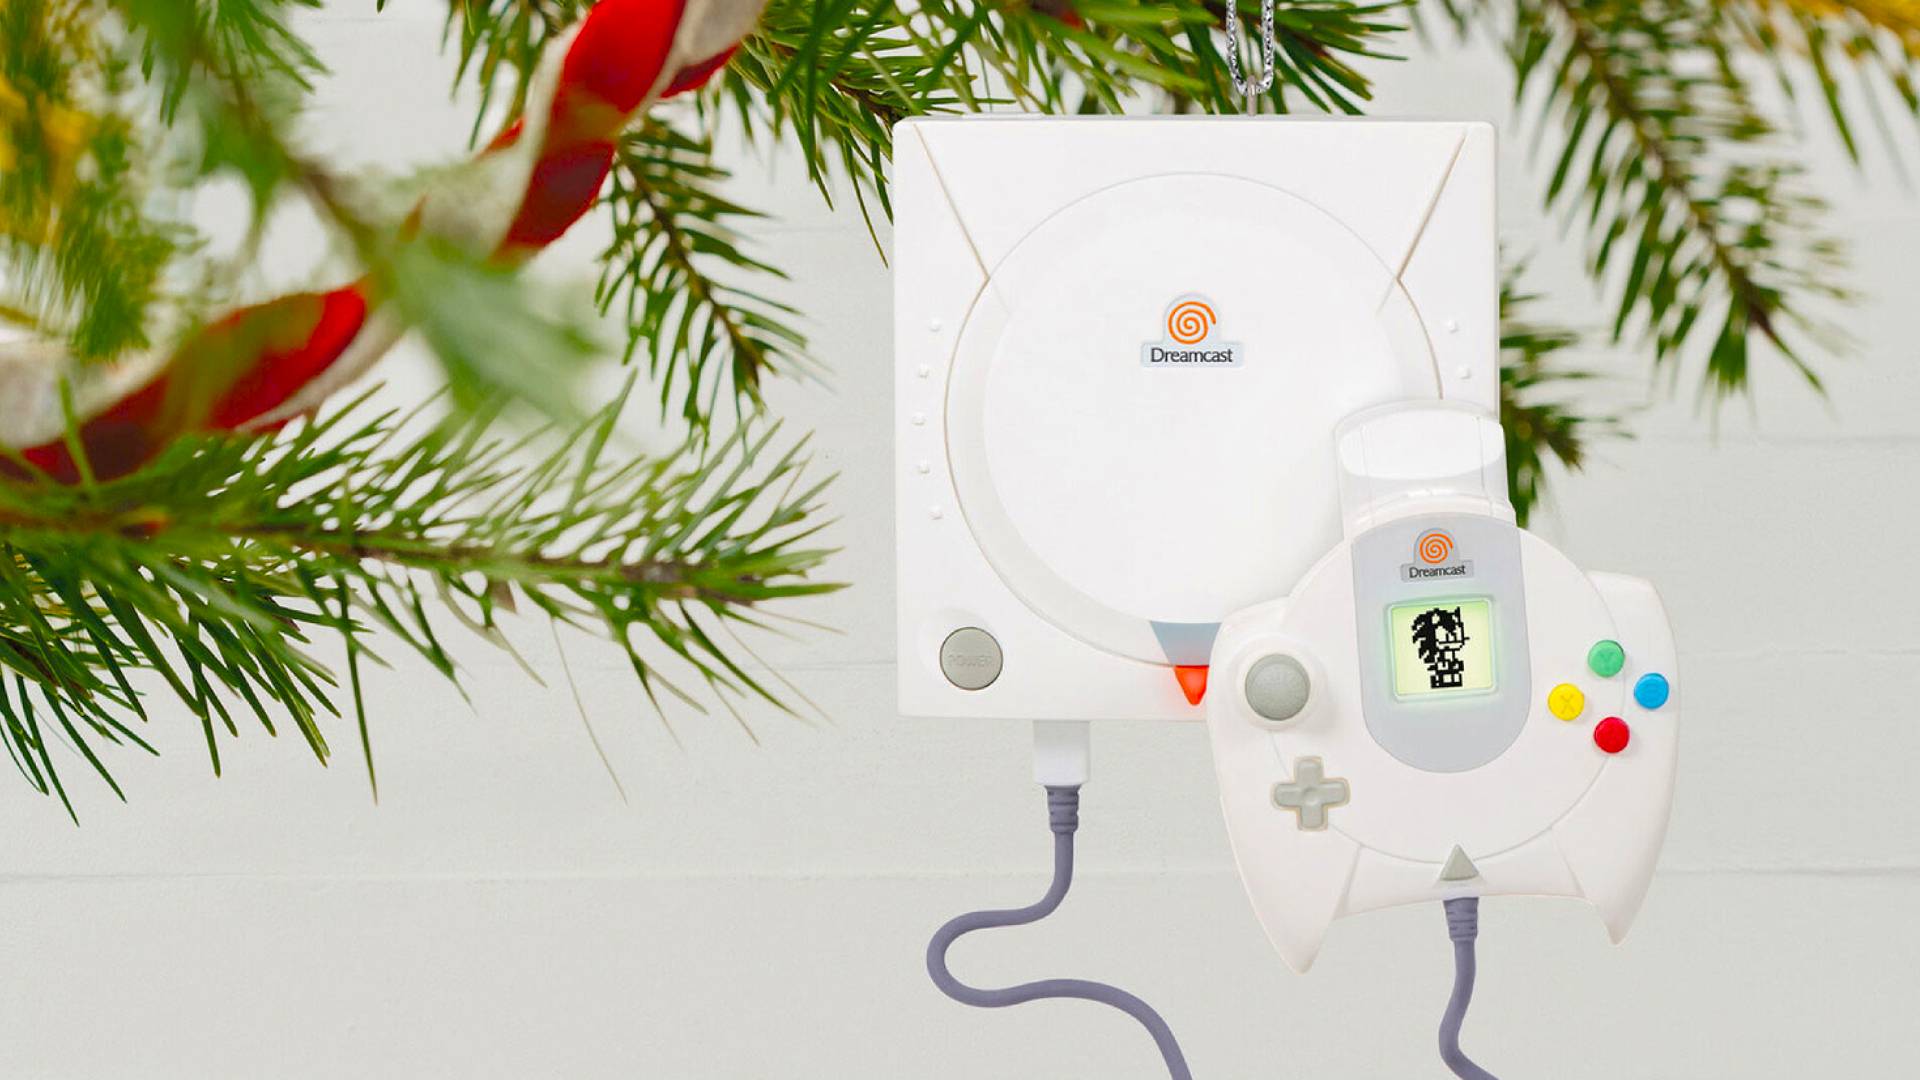 I'm not starting Christmas until I get this Sega Dreamcast